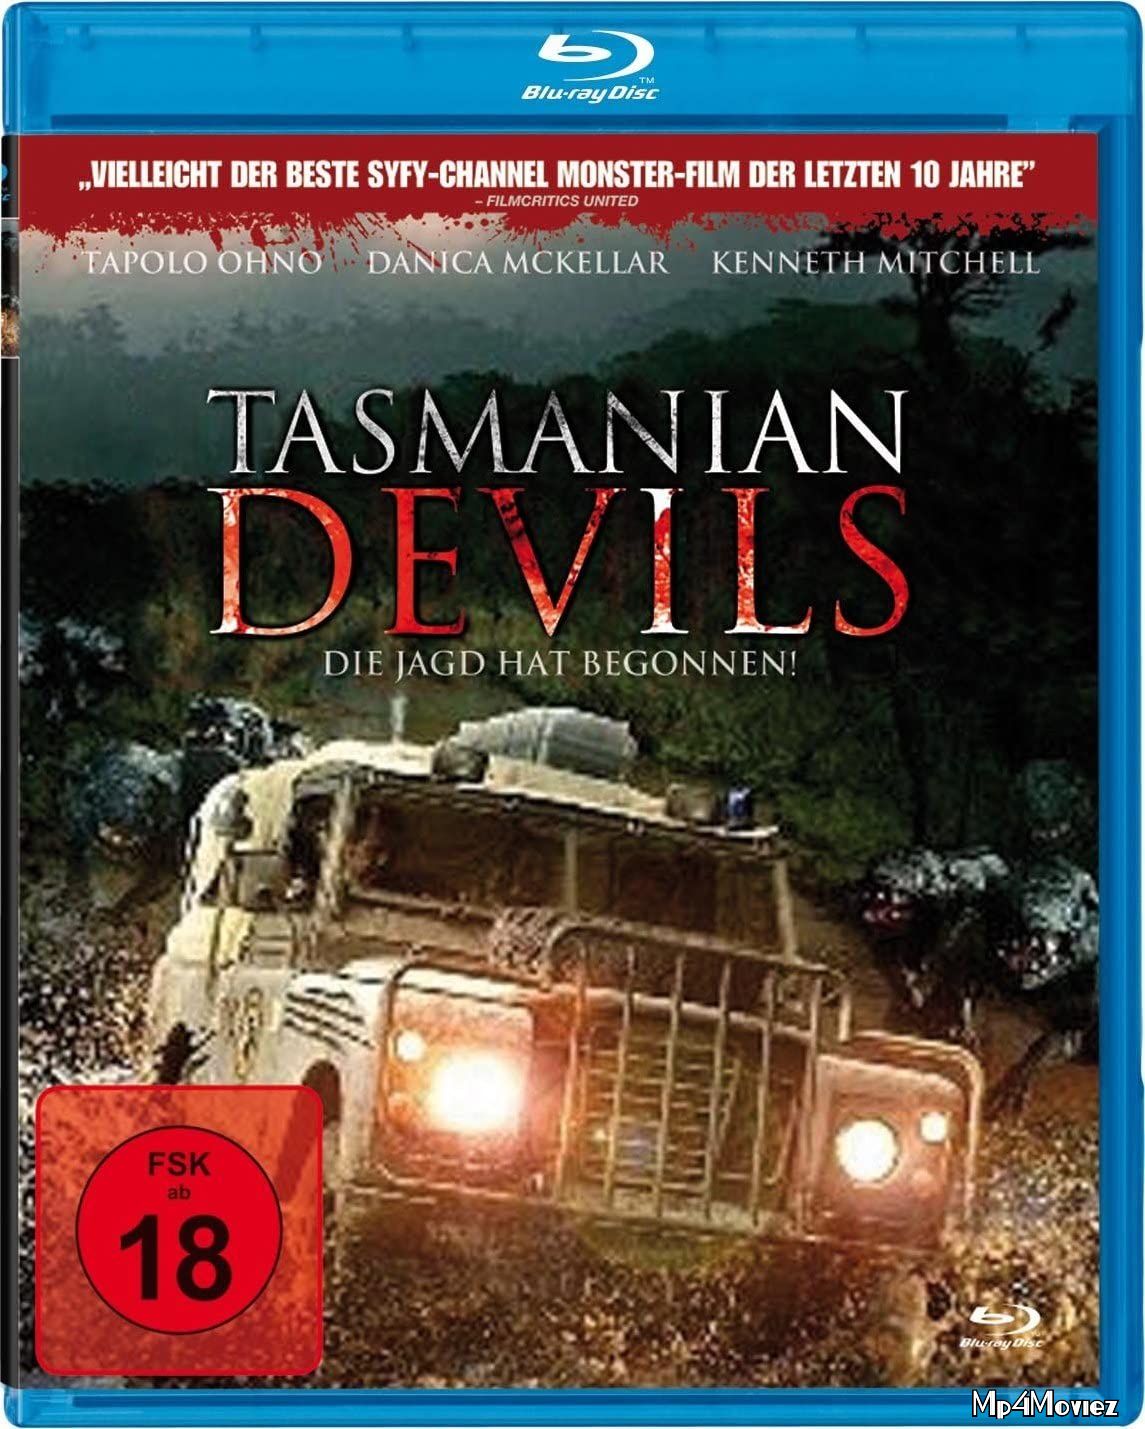 Tasmanian Devils (2013) Hindi Dubbed BRRip download full movie